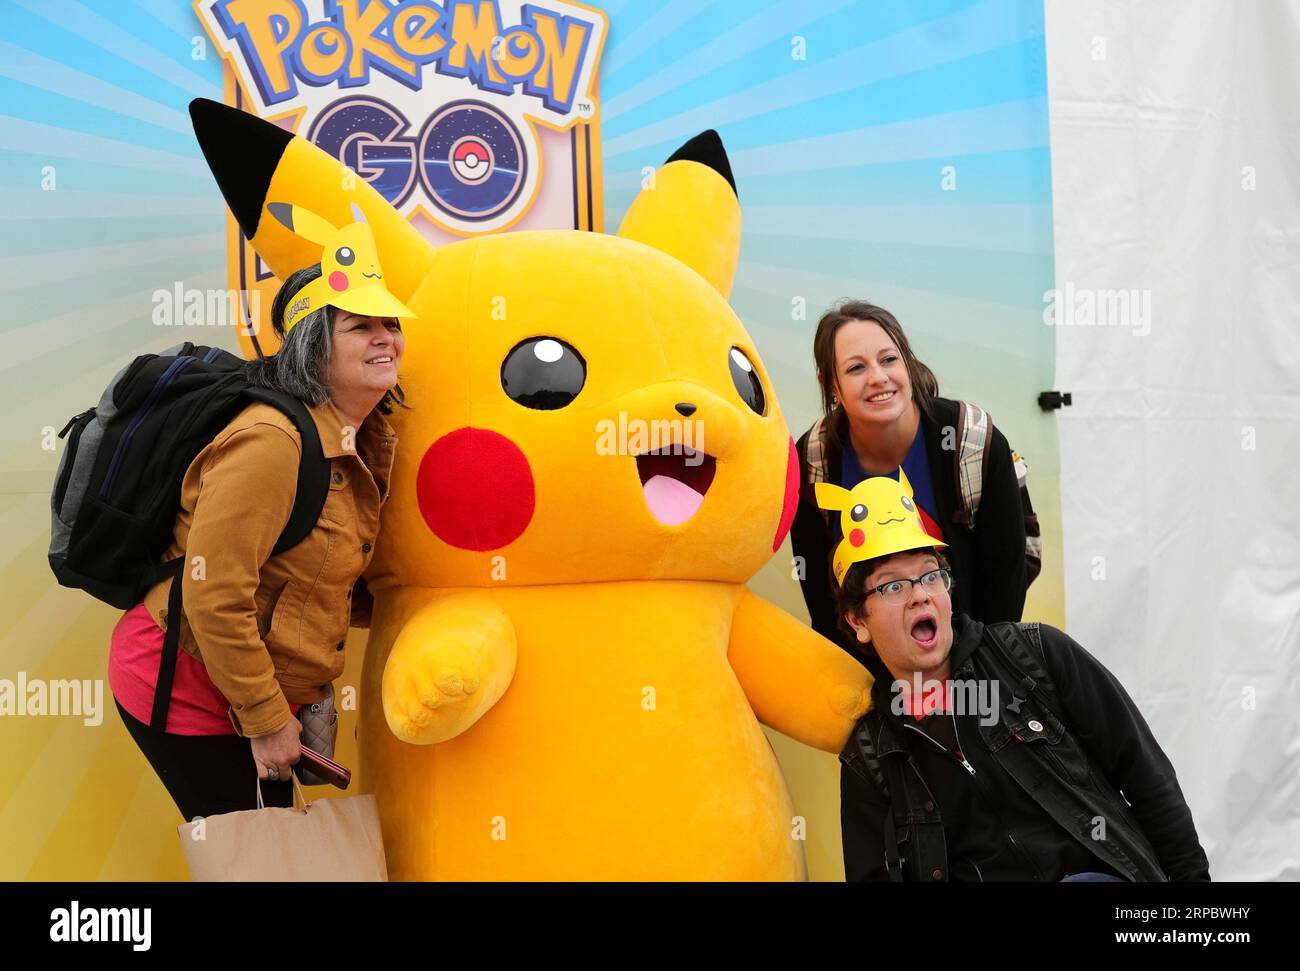 Pokemon GO was the happiest moment in America